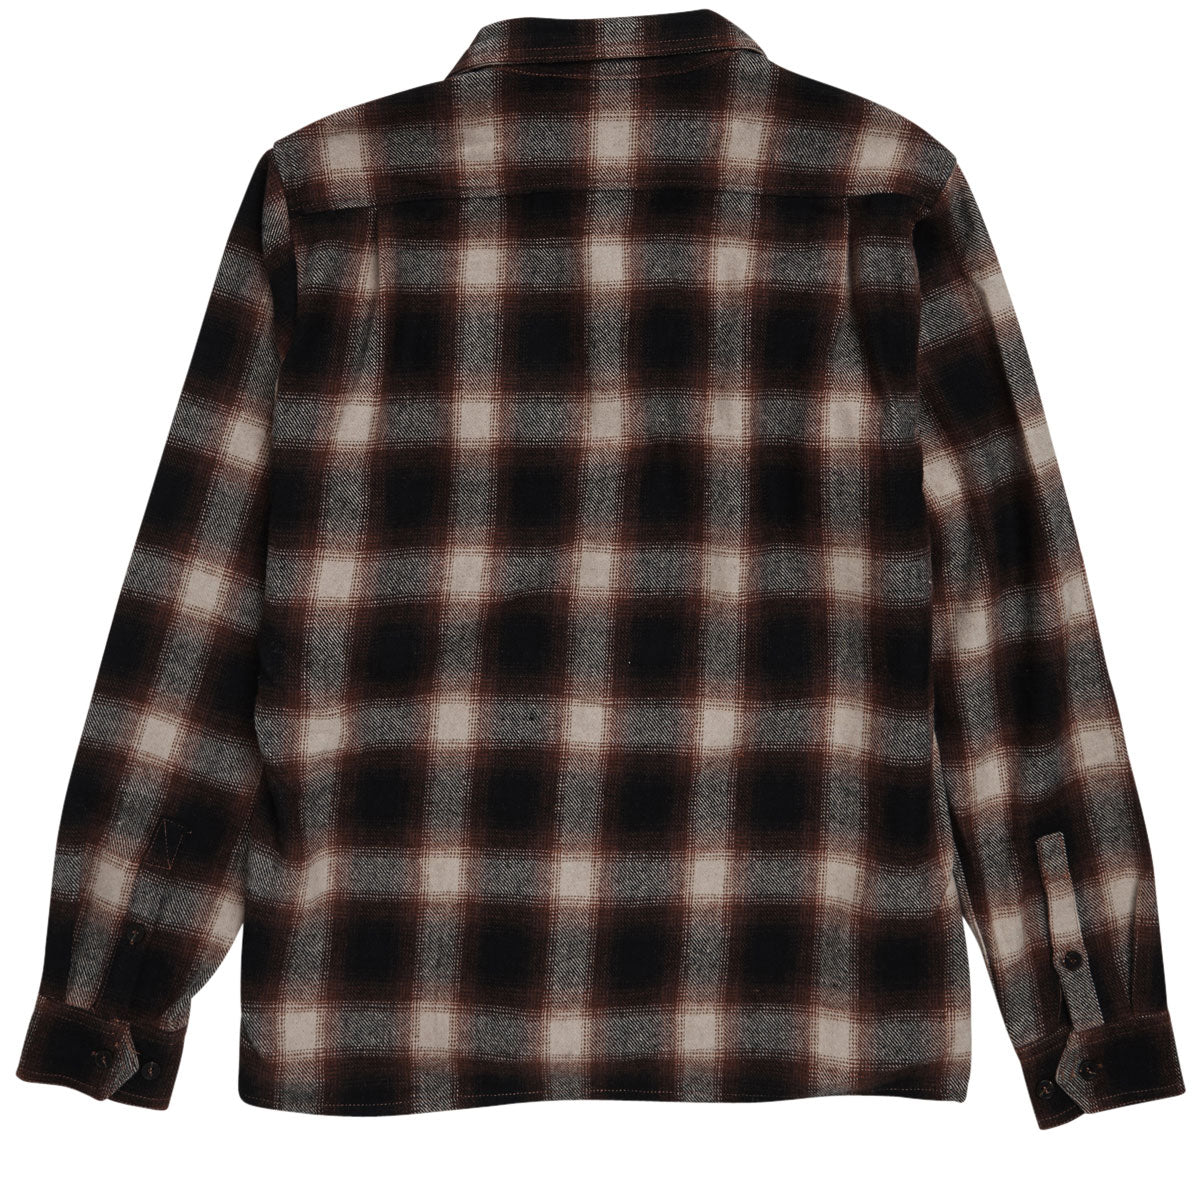 Rhythm Plaid Flannel Long Sleeve Shirt - Rust image 2